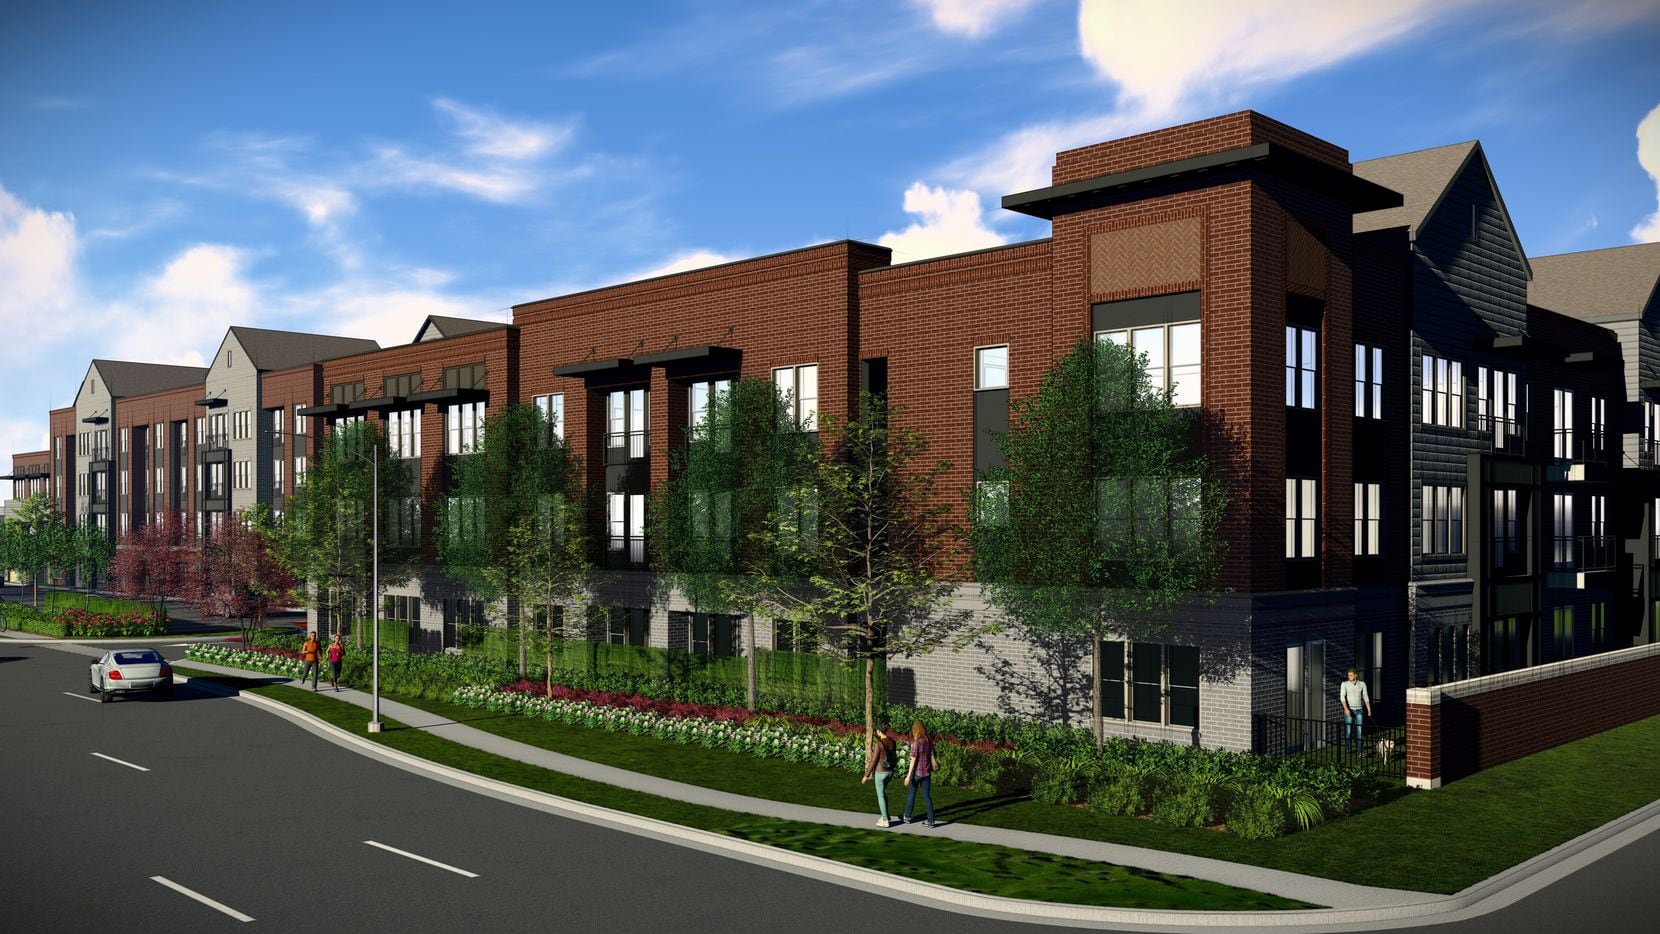 New housing complex in central Arlington will aim to invigorate South Cooper